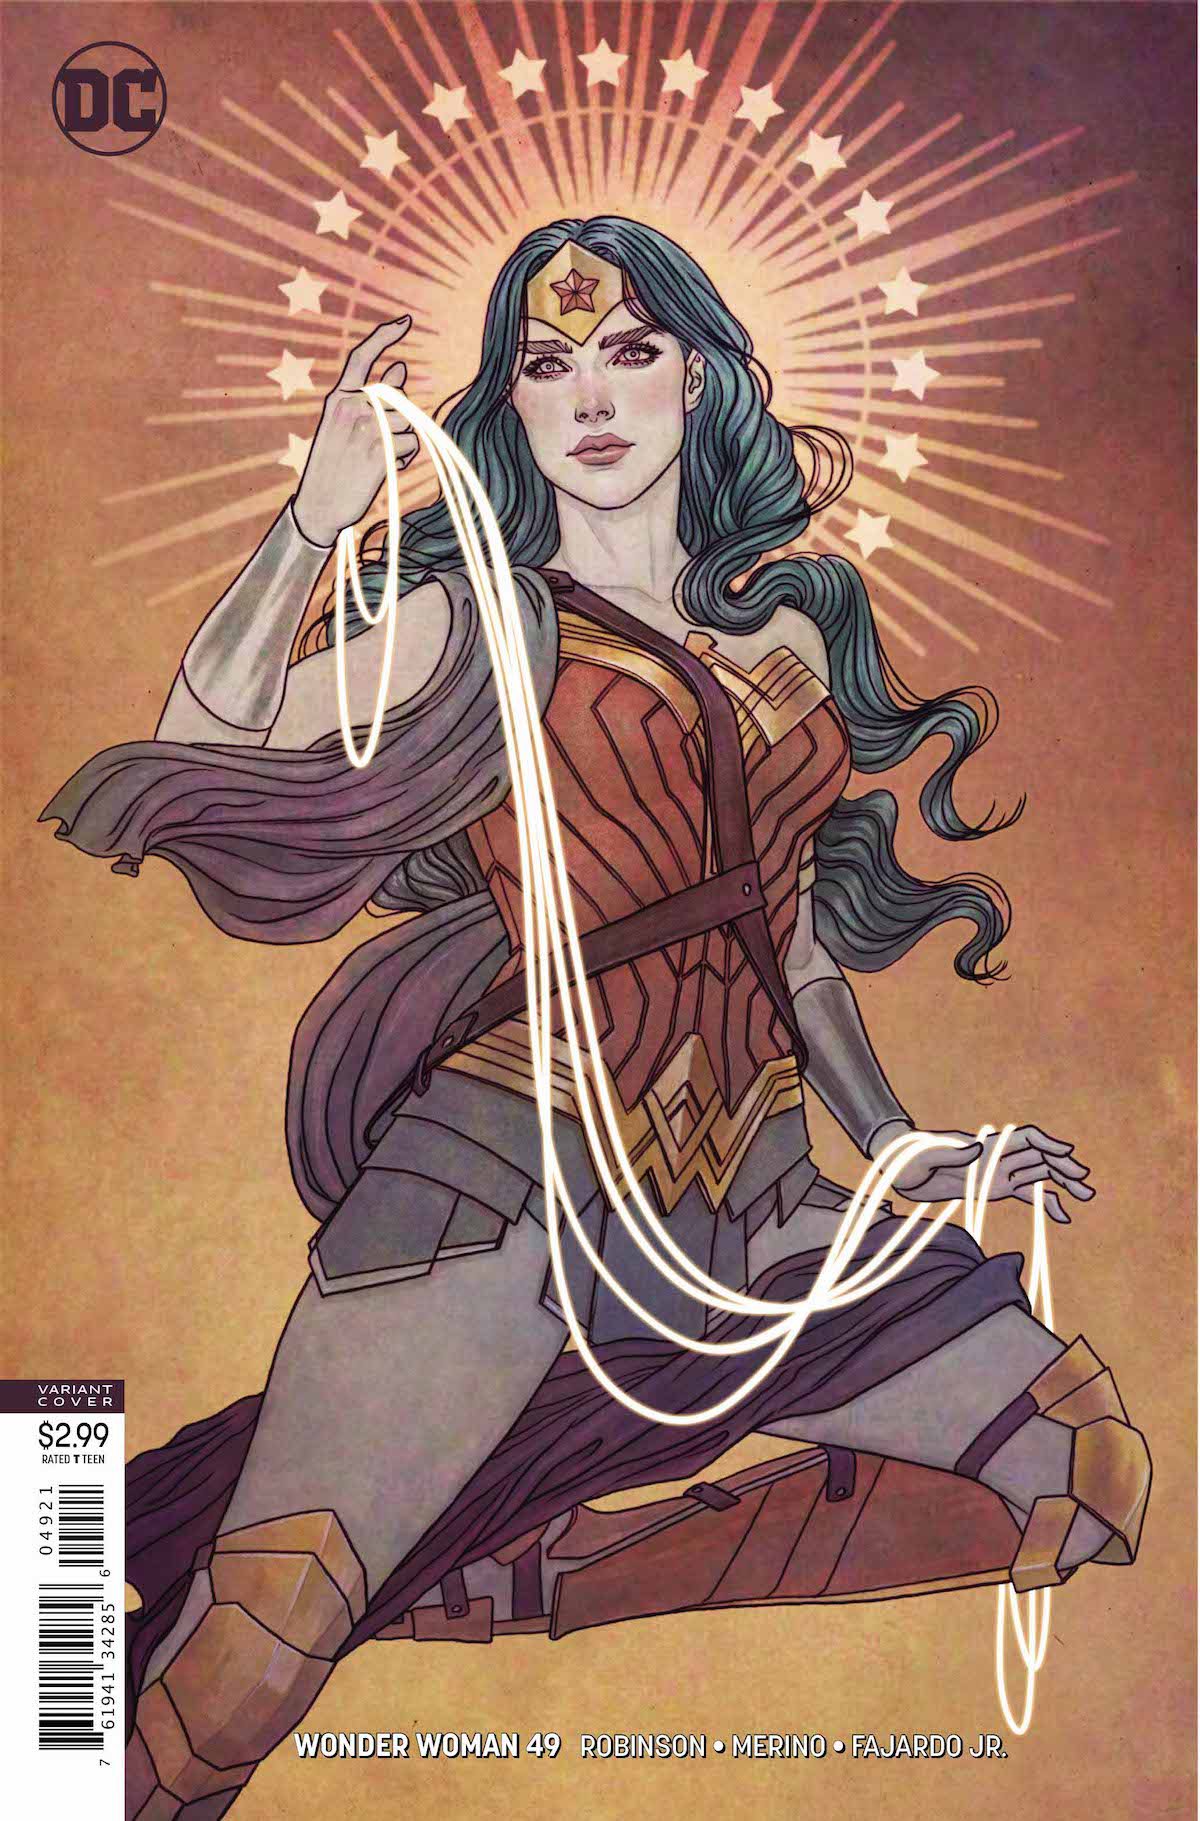 Wonder Woman #49 variant cover